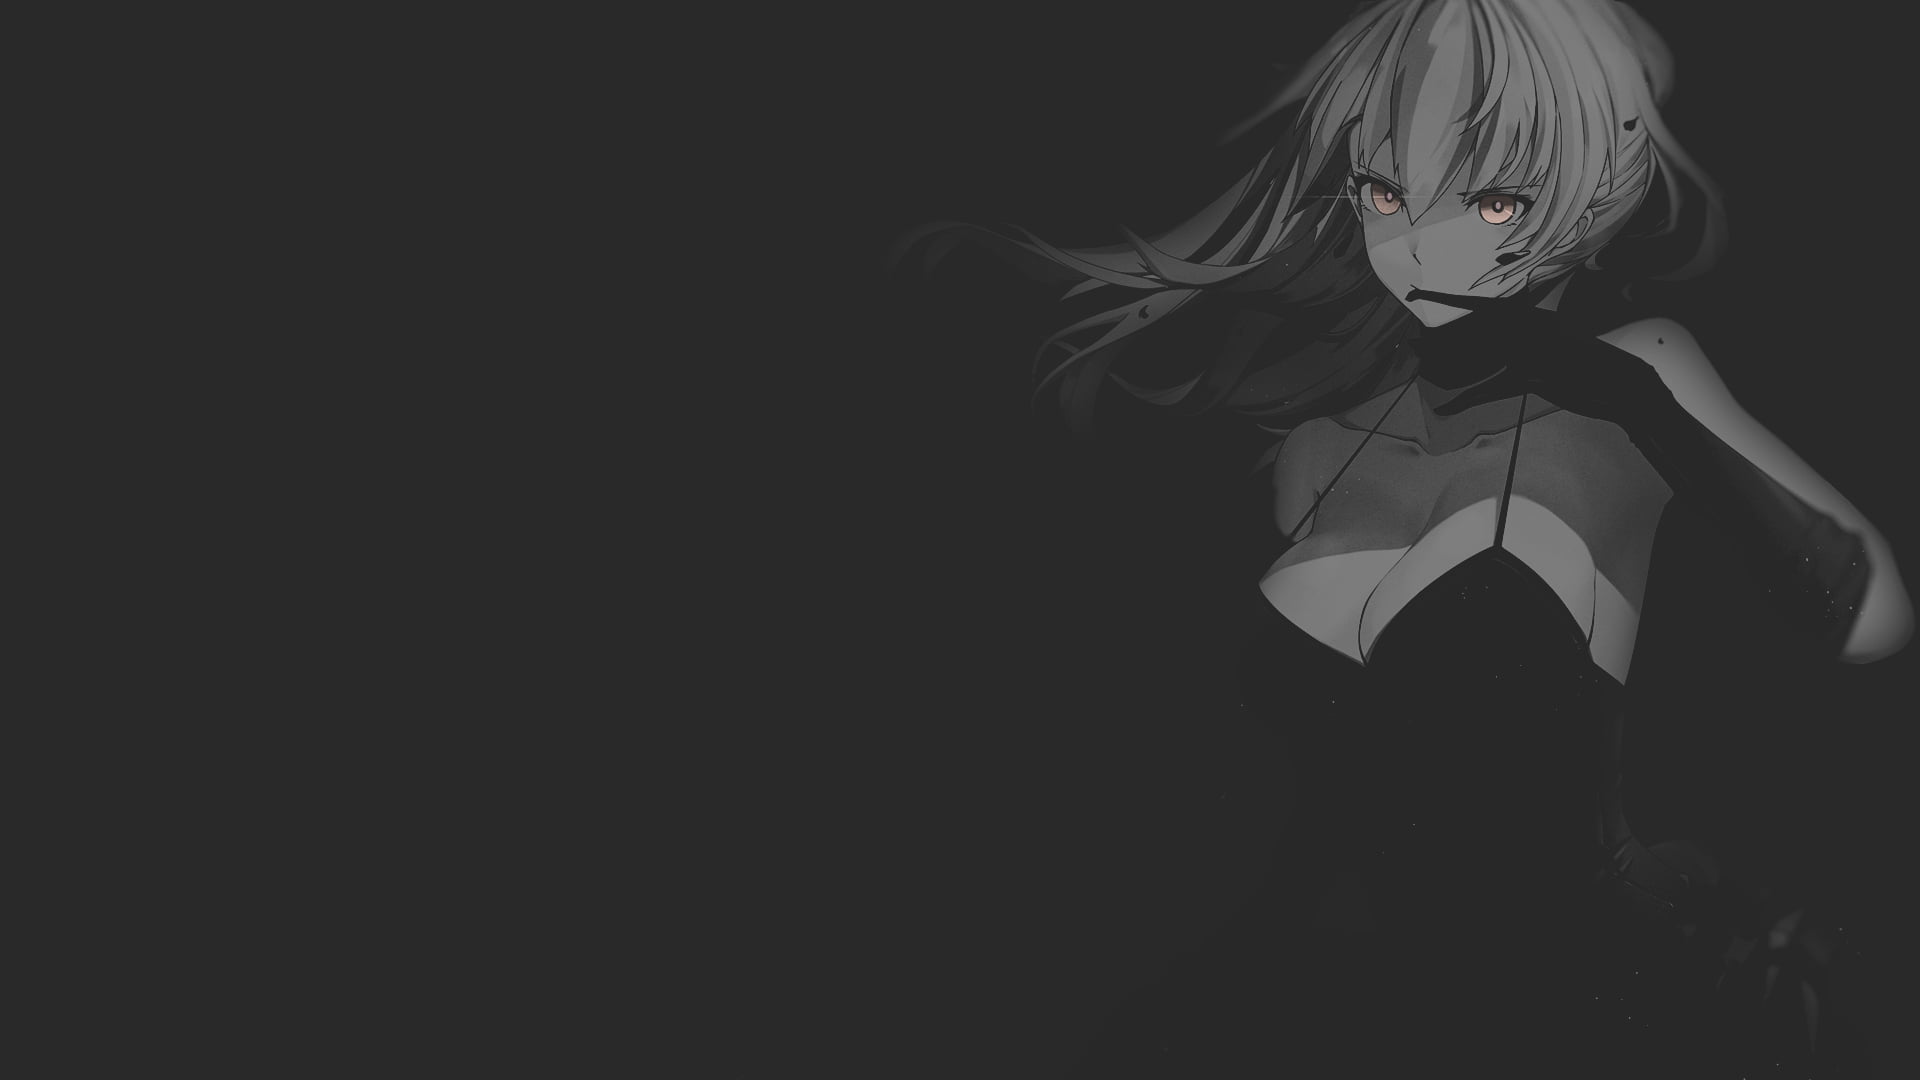 Fate/Stay Night anime illustration, minimalism, texture, black background